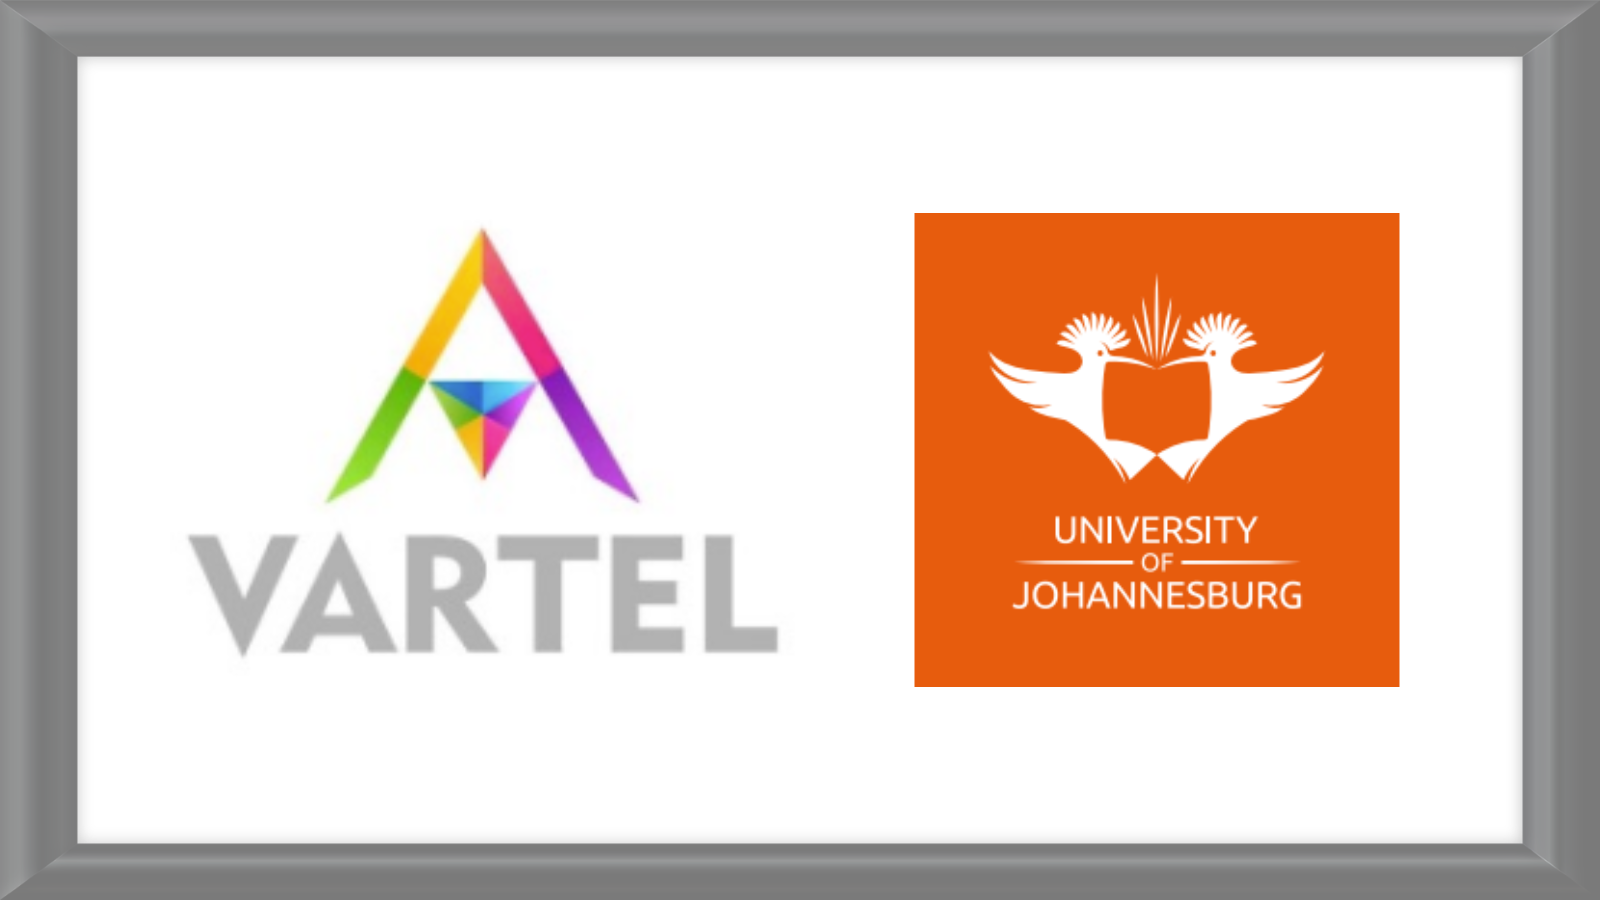 VARTEL logo and University of Johannesburg logo